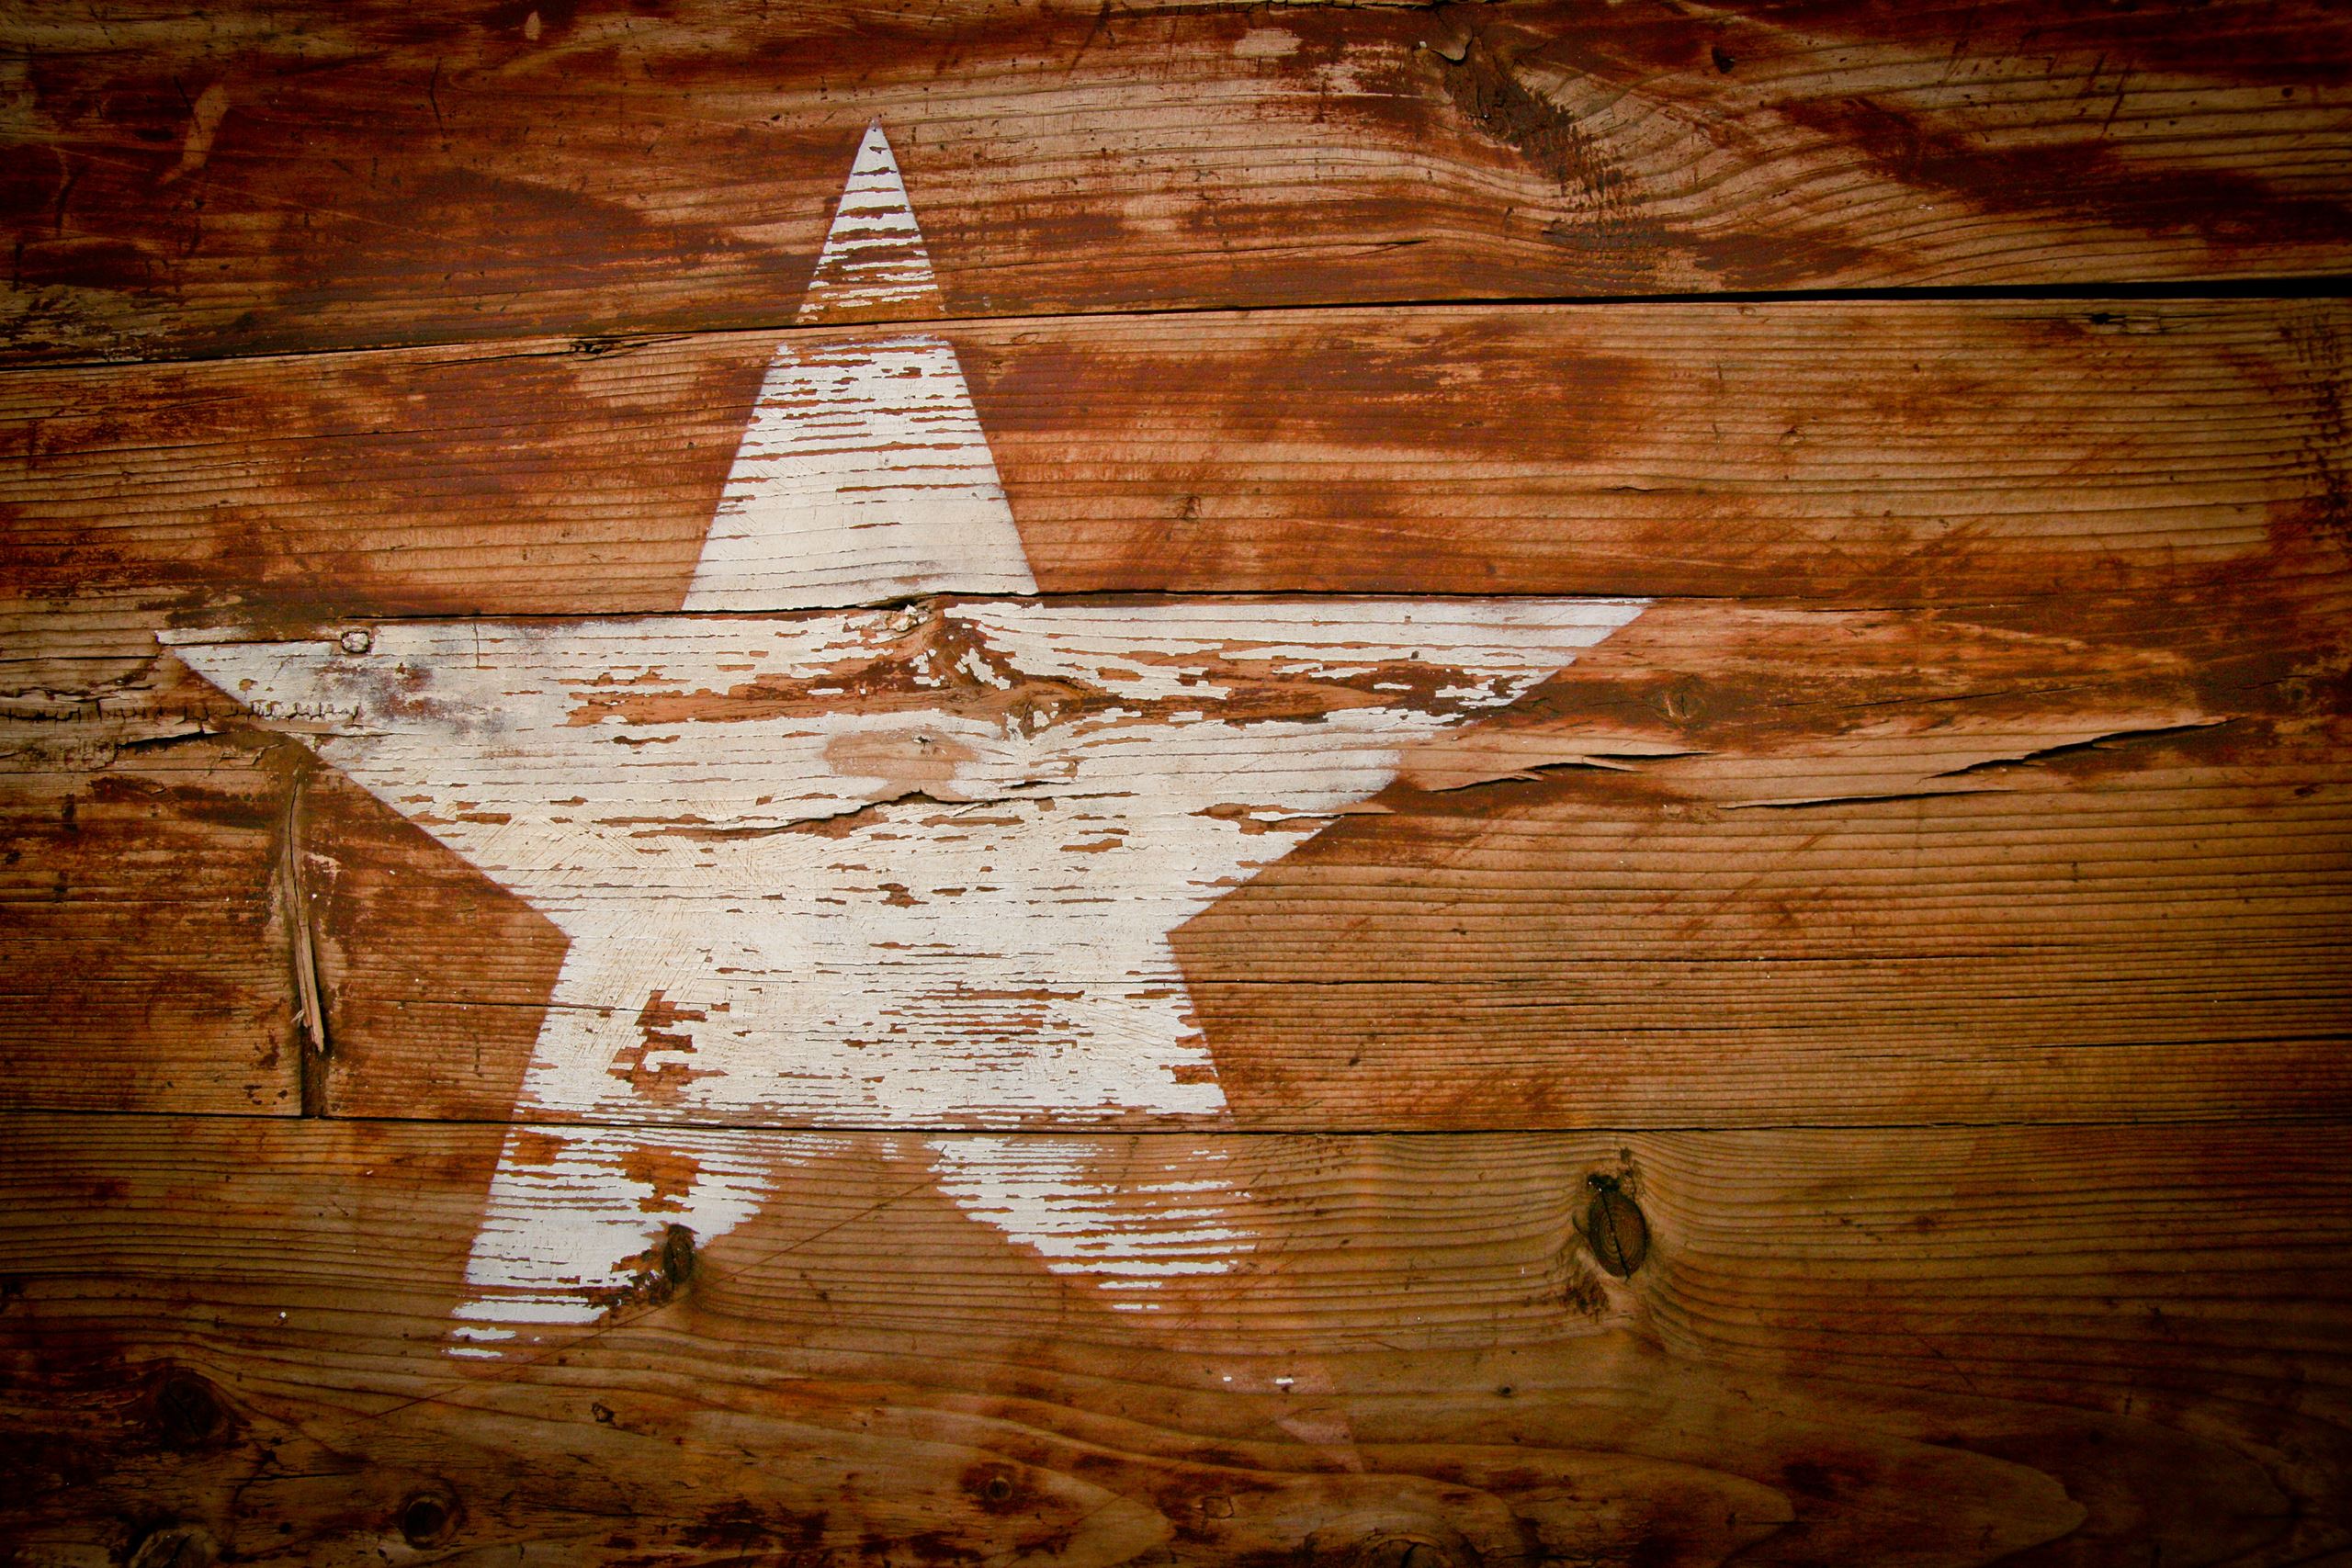 Texas Star painted on wood